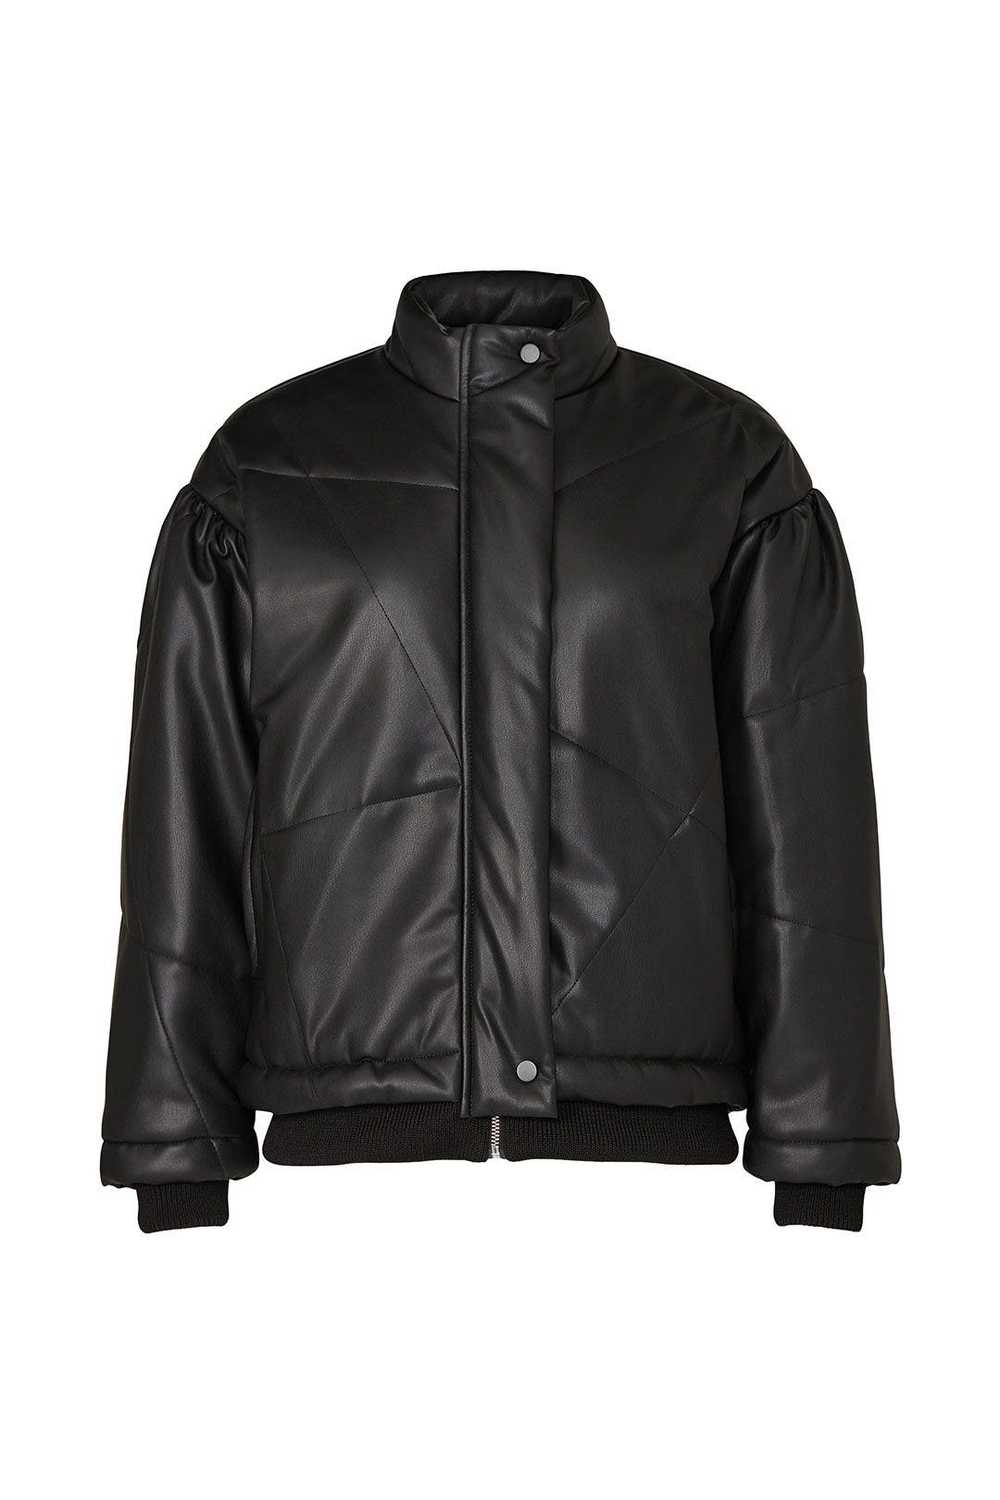 Sea New York Black Faux Leather Puff Jacket - image 6